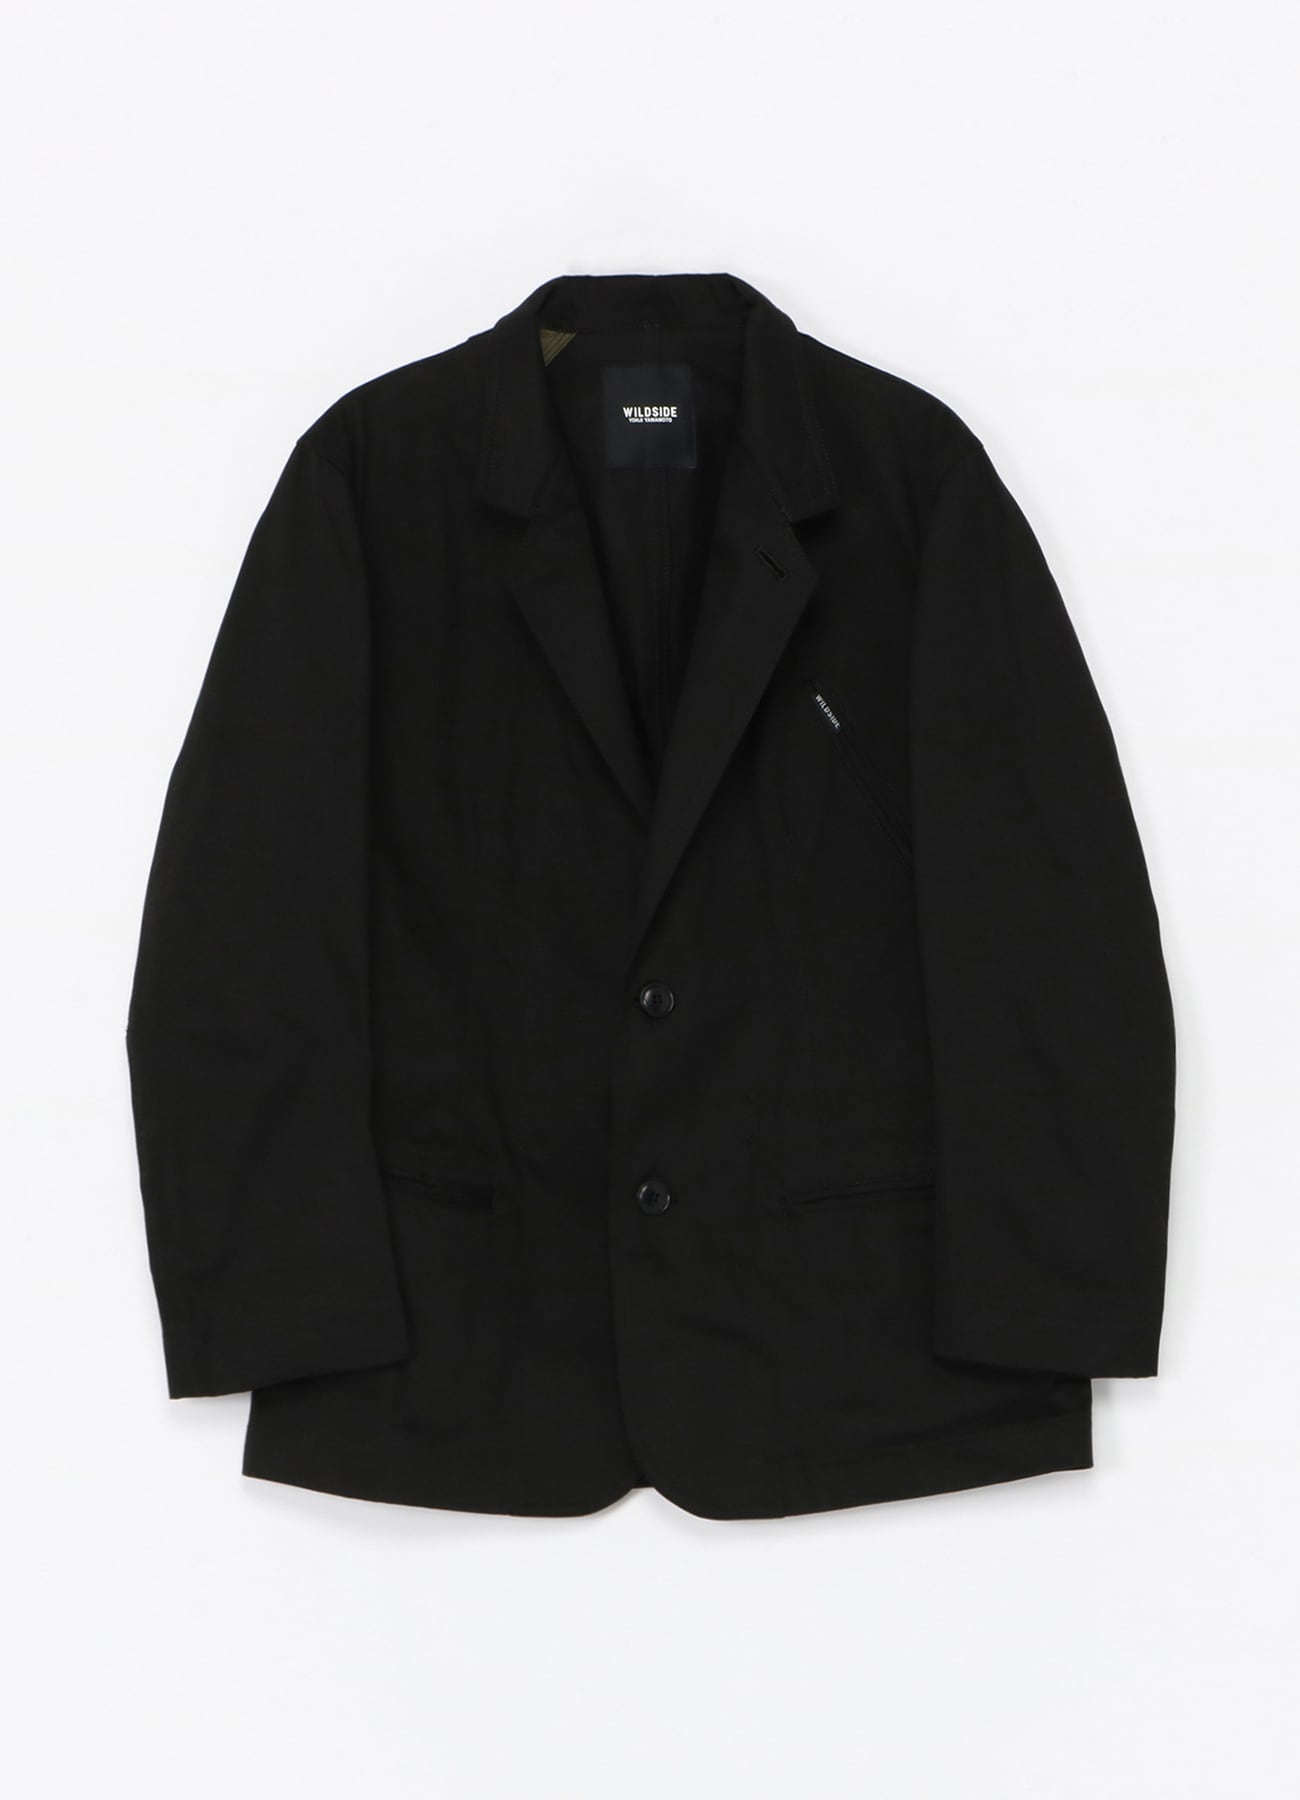 Cotton Chino 2B Tailored Collar Jacket